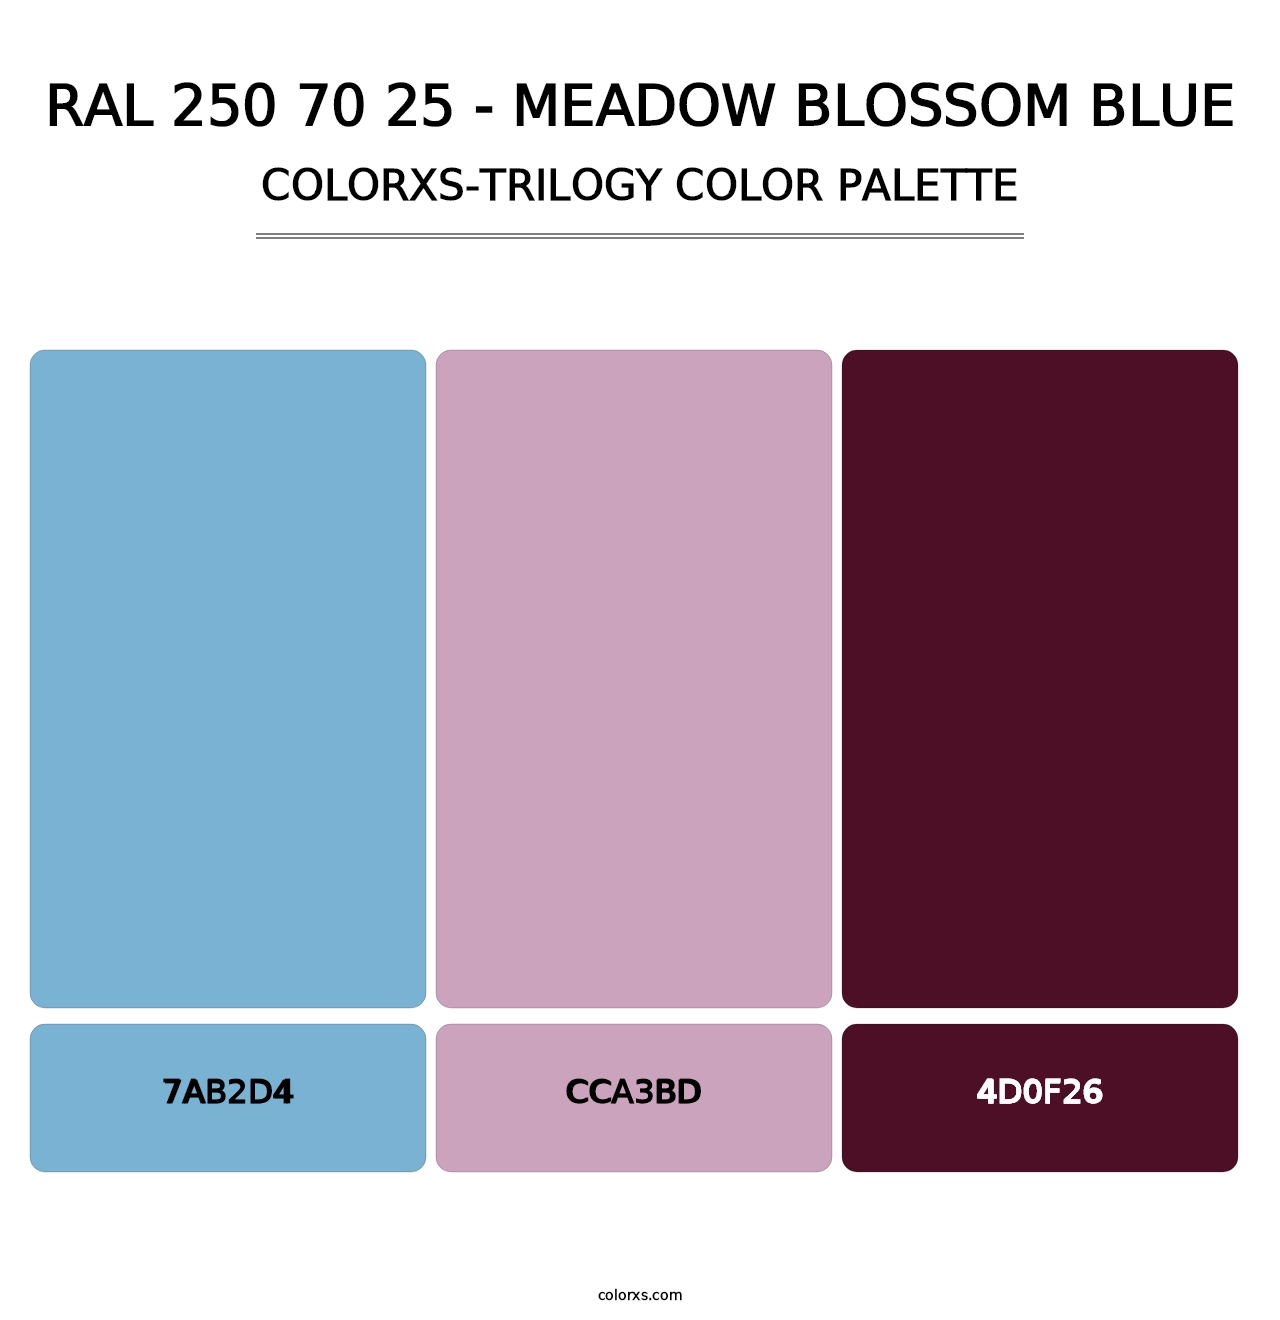 RAL 250 70 25 - Meadow Blossom Blue - Colorxs Trilogy Palette